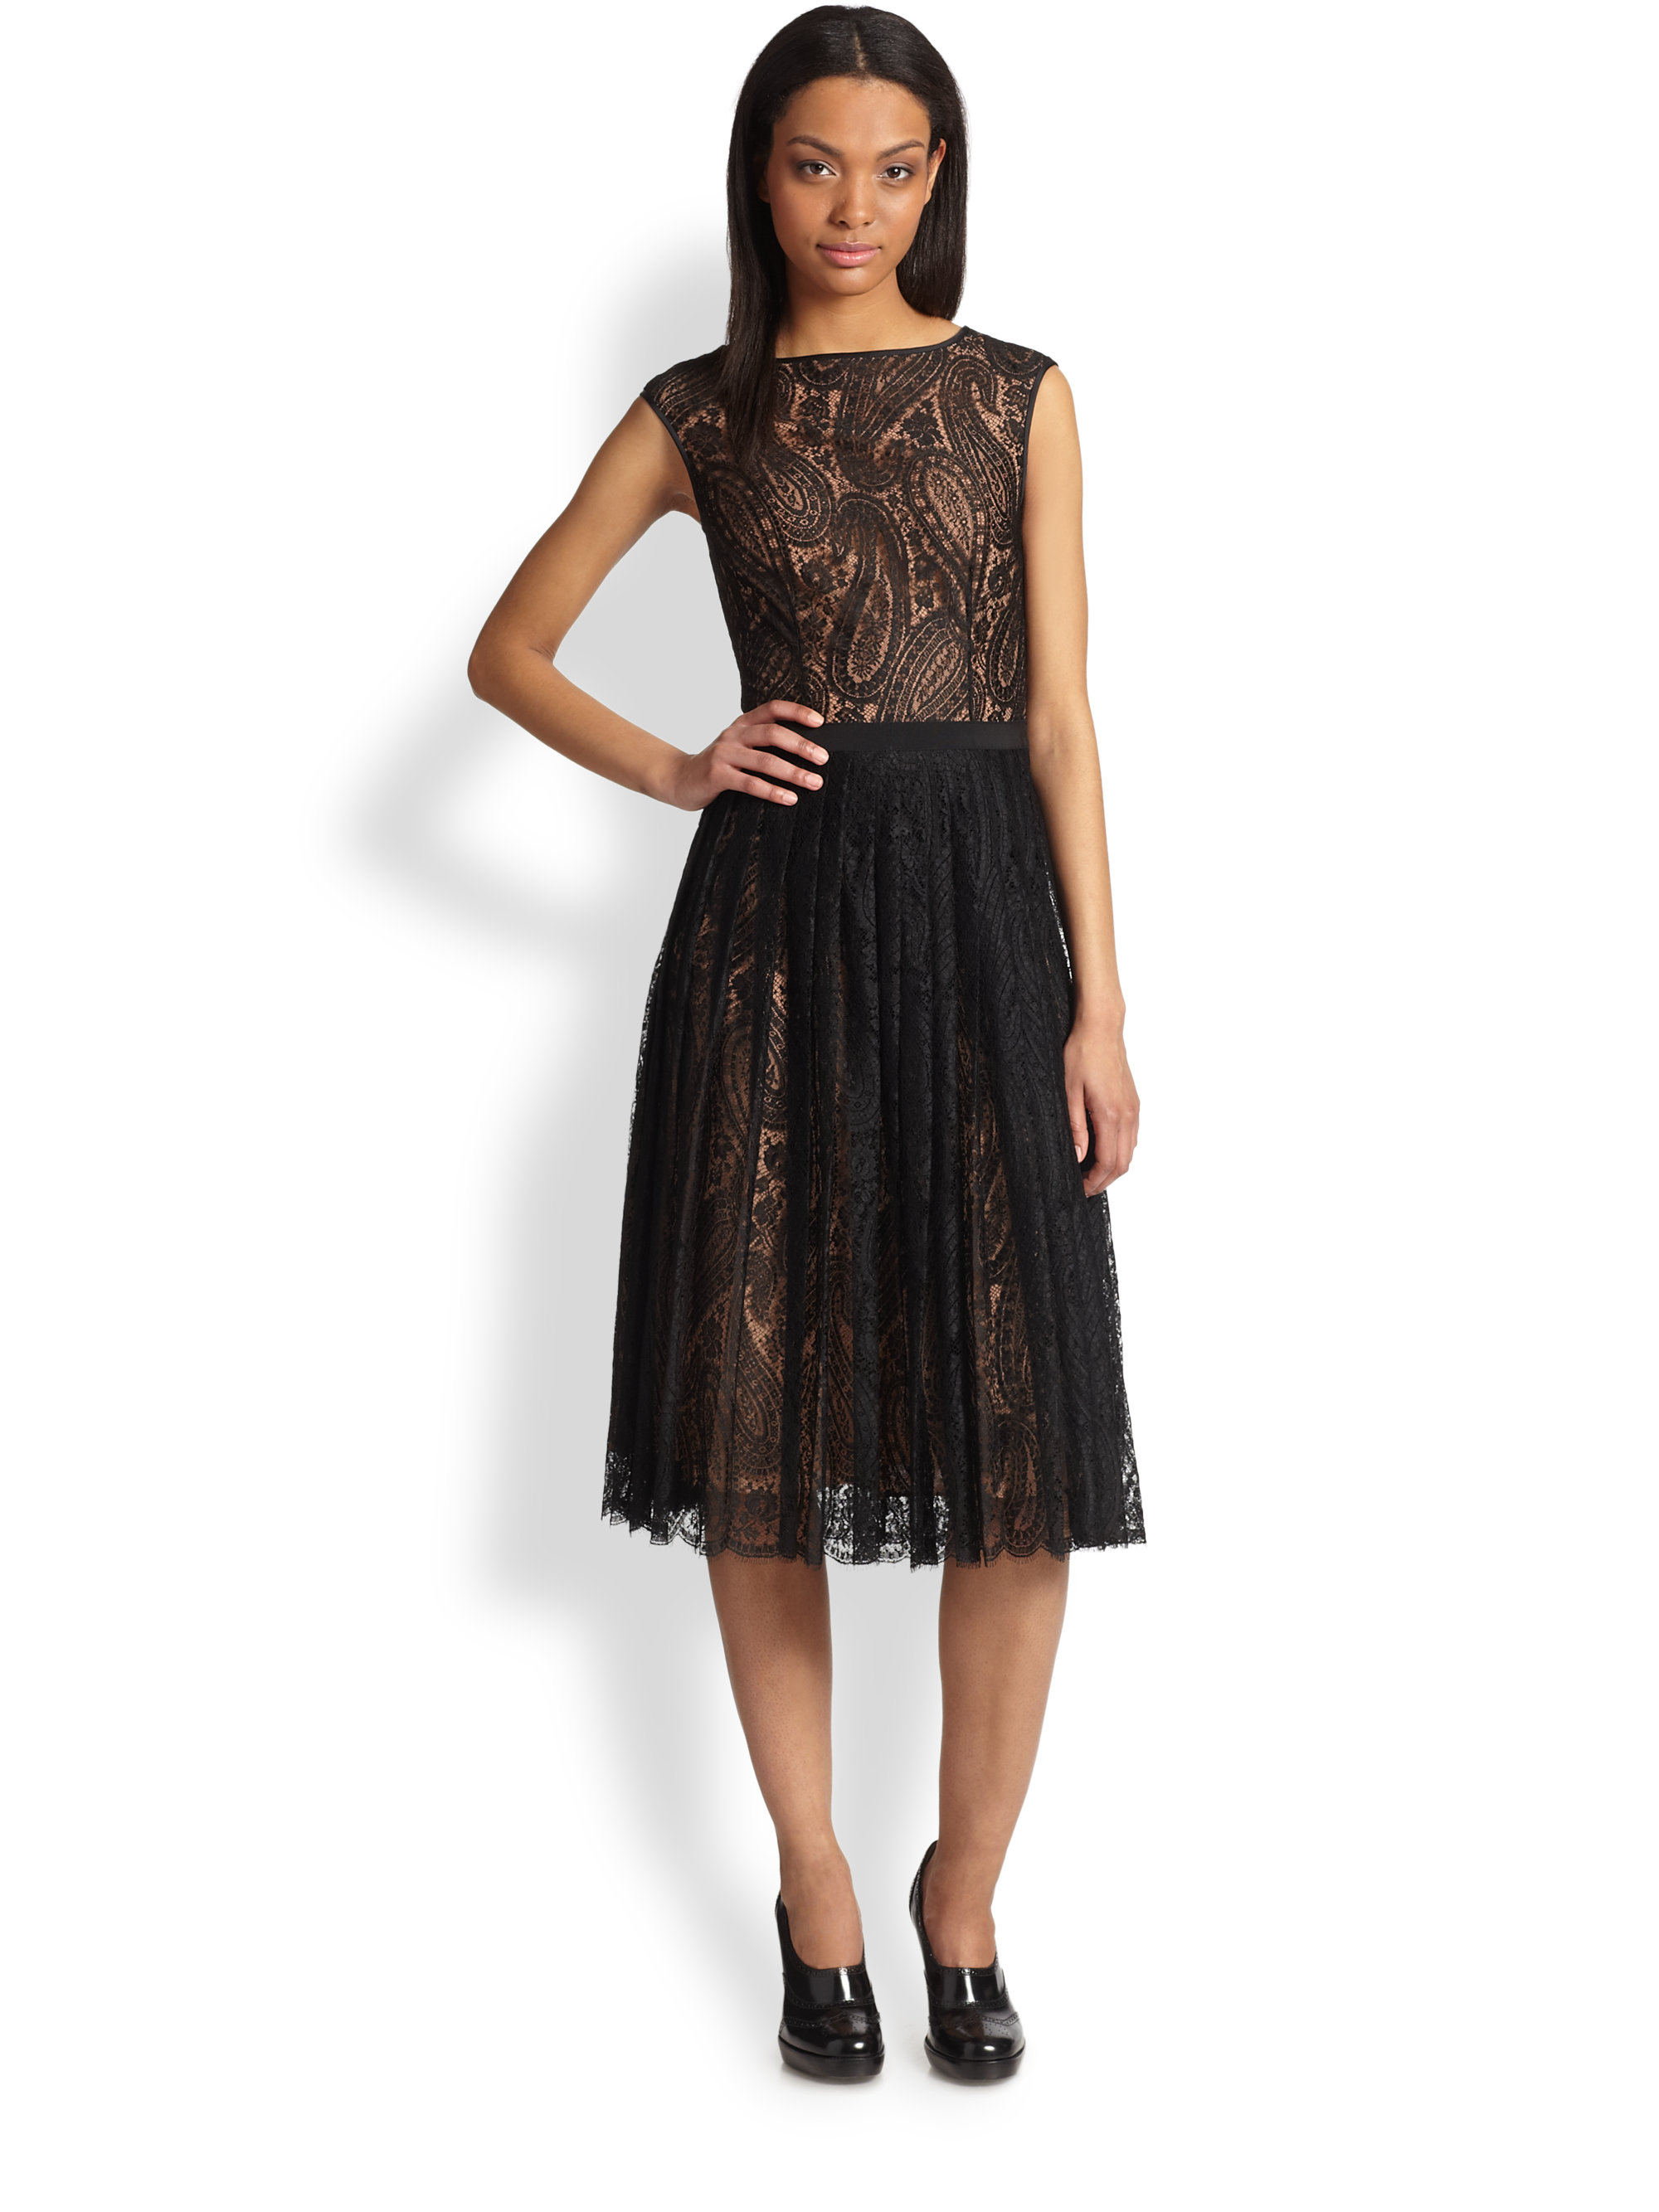 michael kors black lace dress